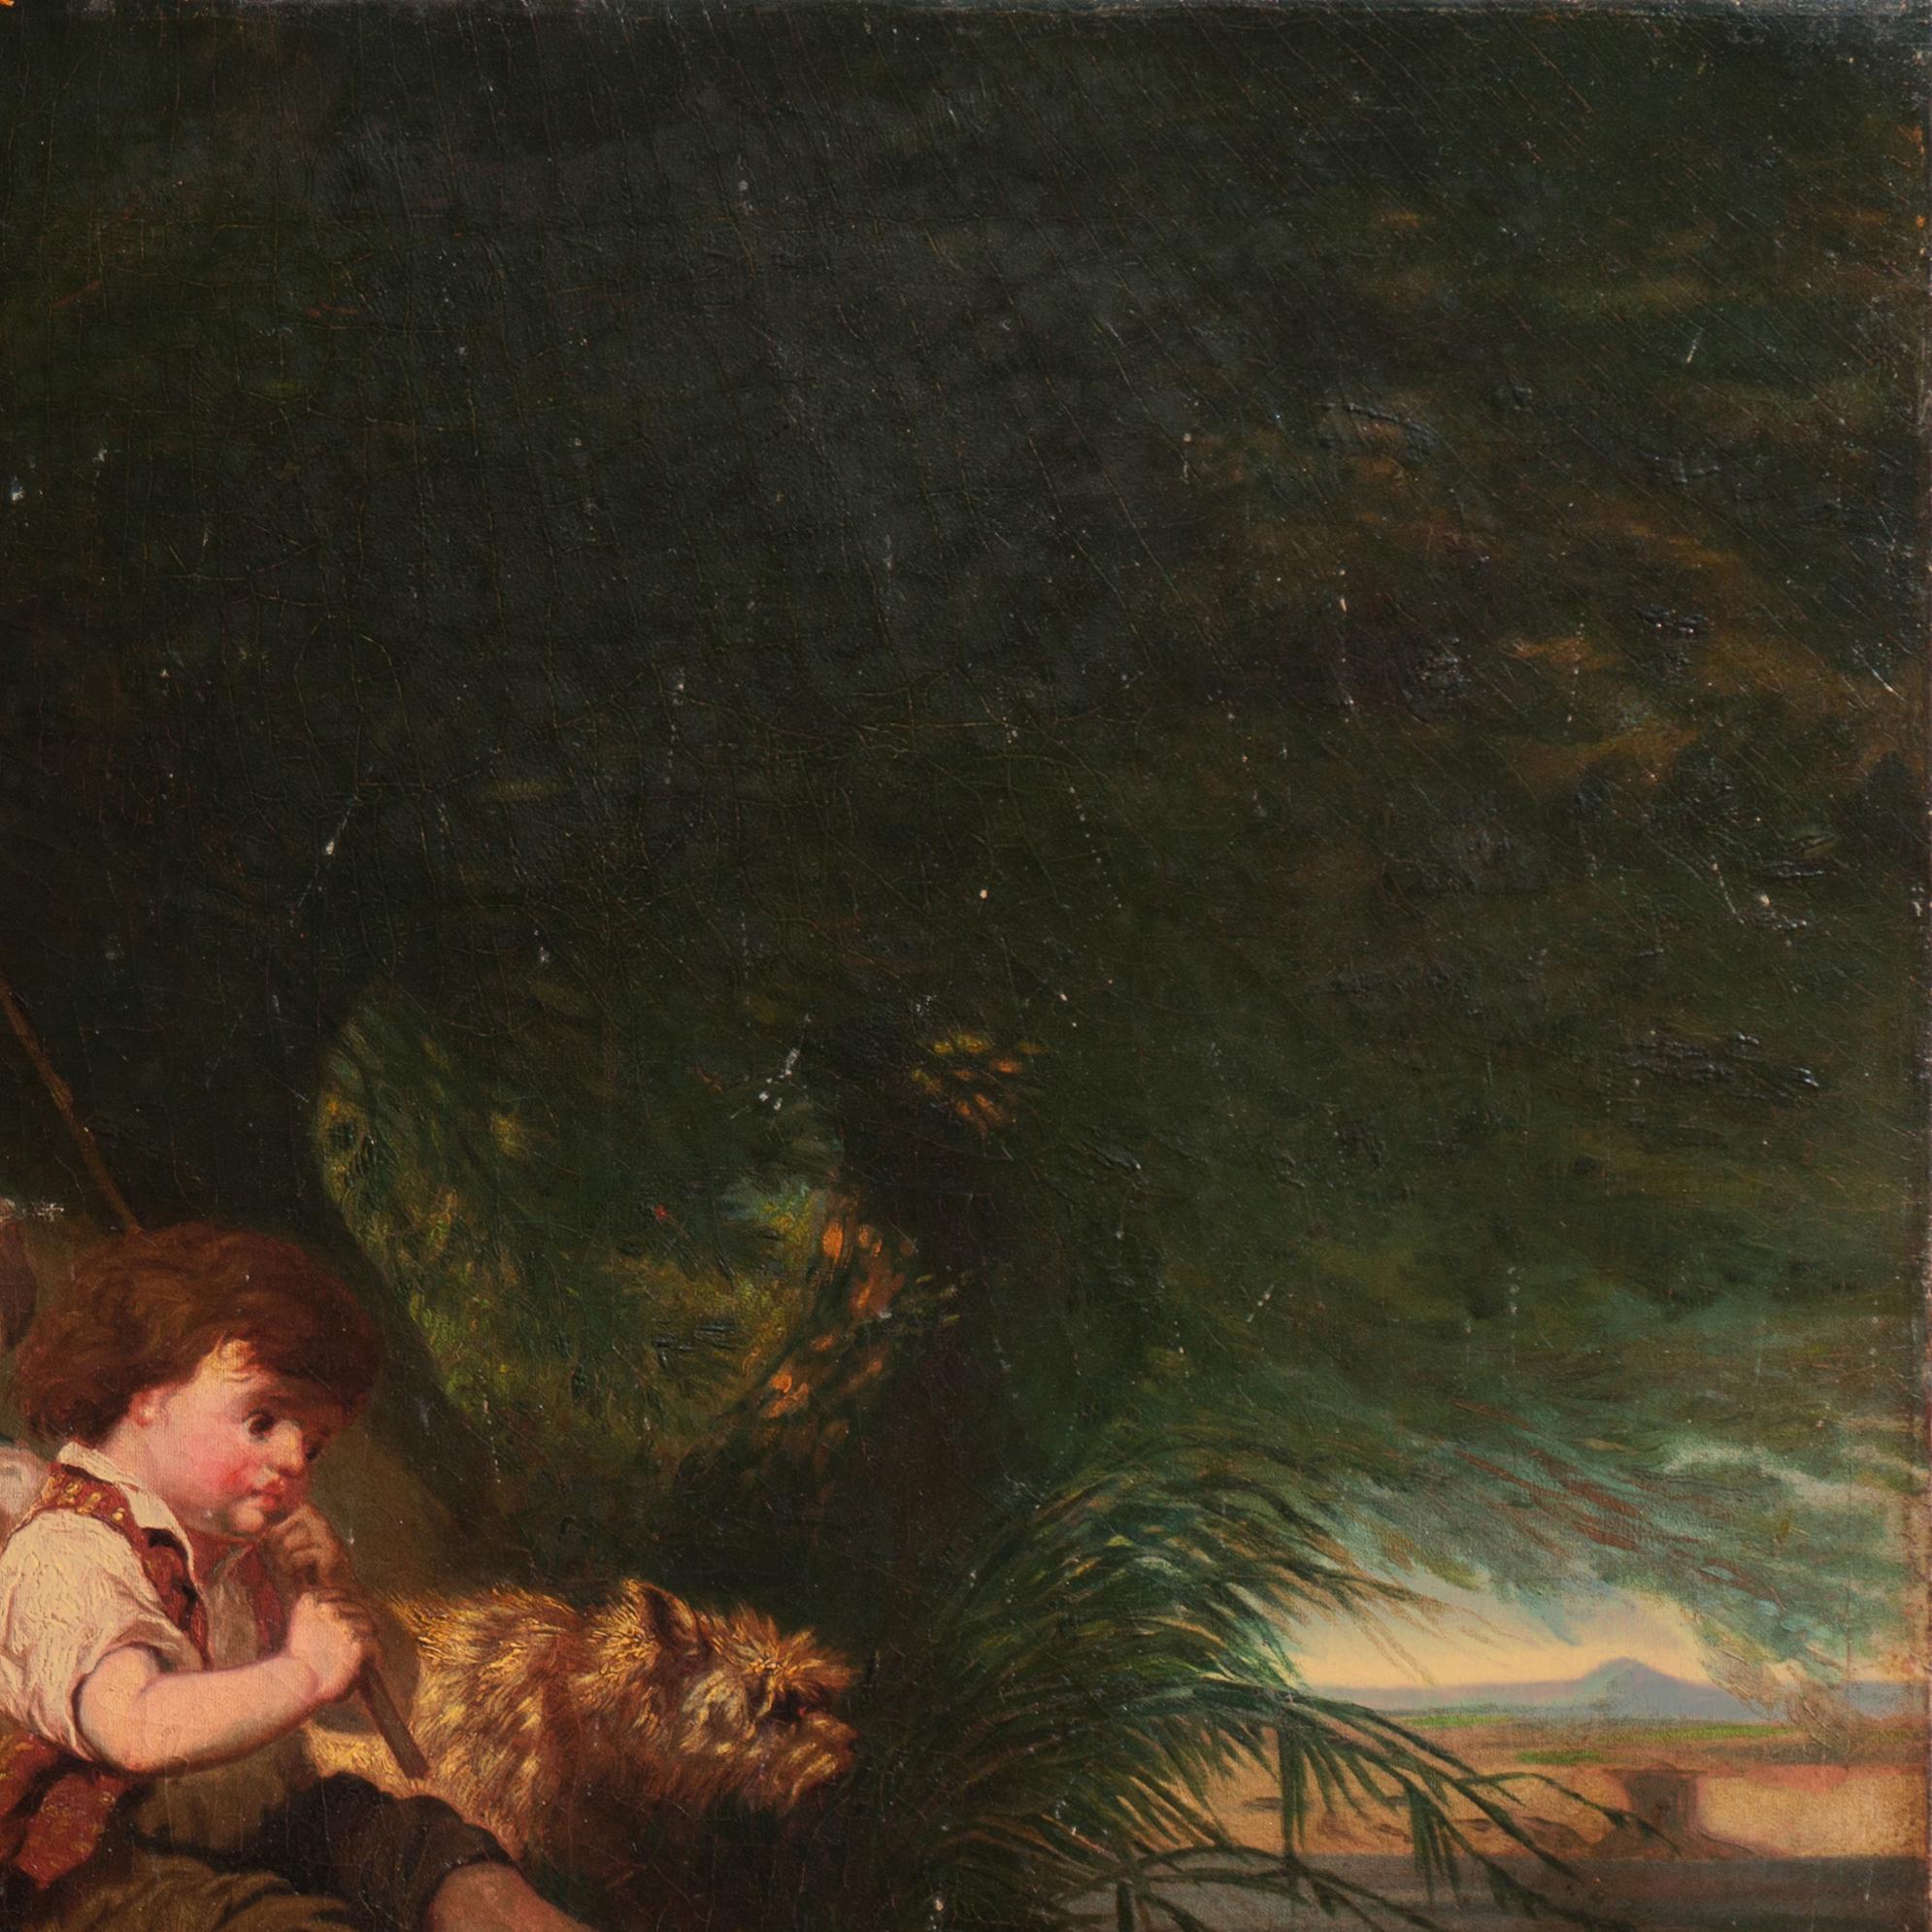 'Children Landing a Catfish', 19th Century American School, Large Nocturnal Oil - Black Landscape Painting by American School, 19th Century